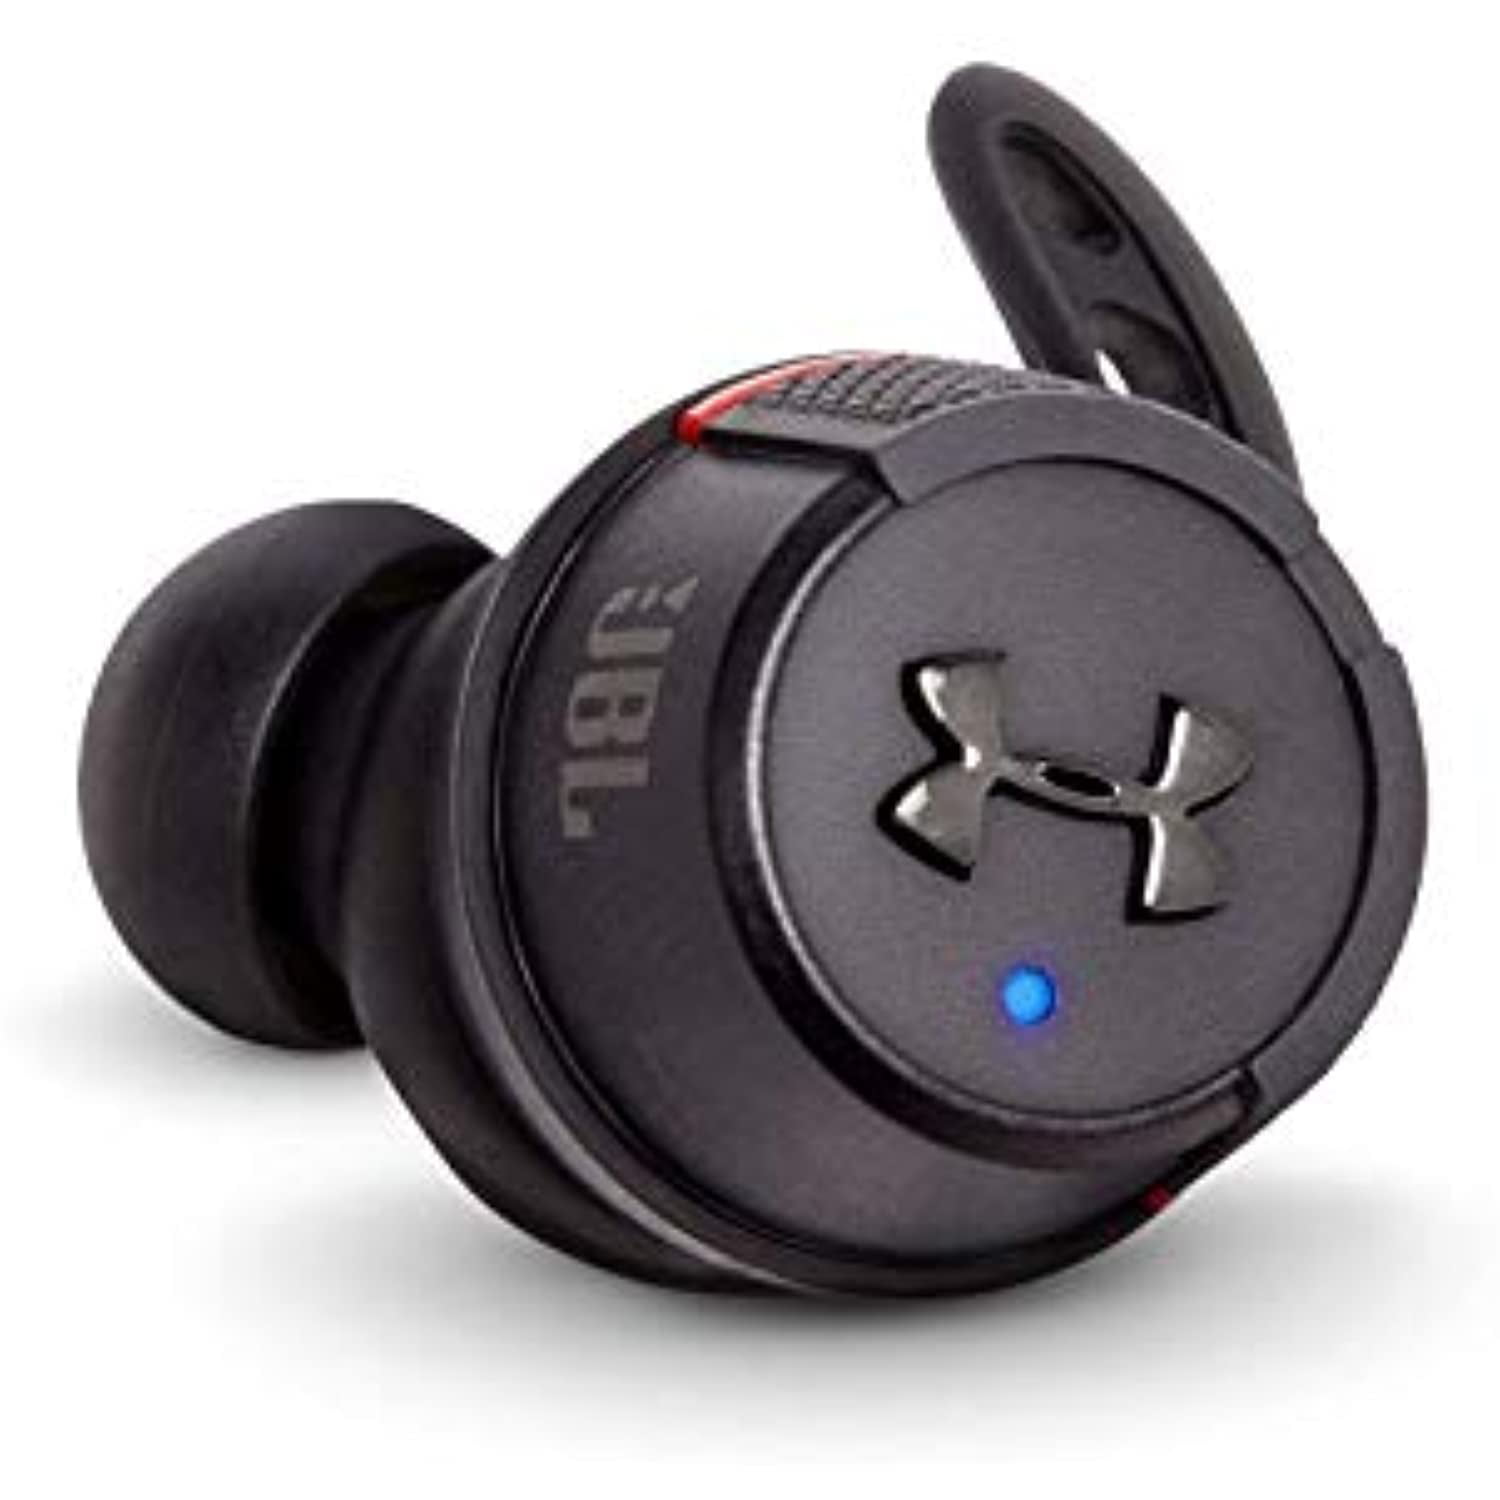 JBL UA Flash True Wireless Bluetooth in-Ear Headphones Bundle with 